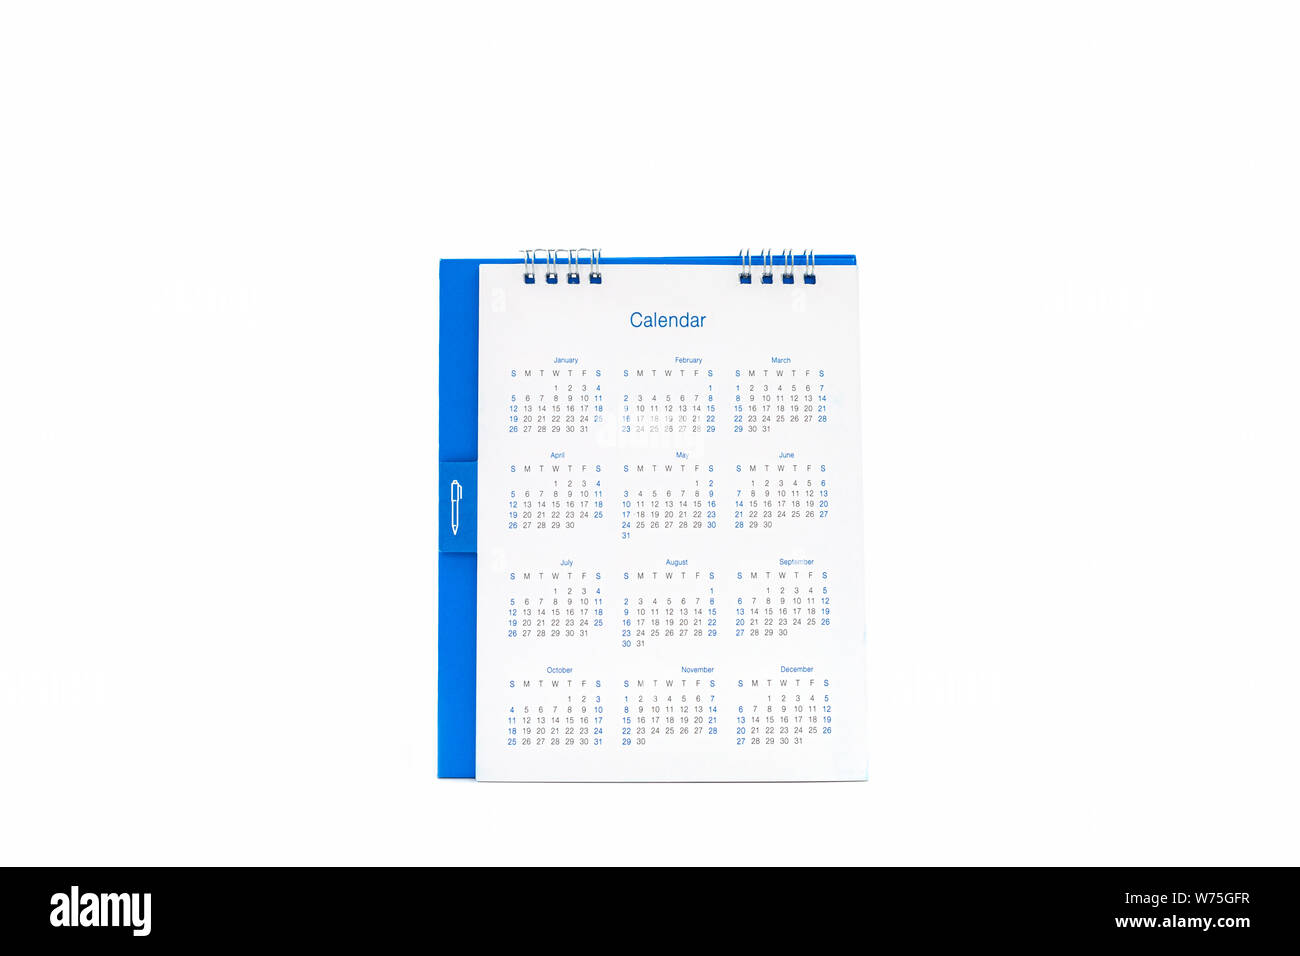 White paper desk spiral calendar isolated on white background. Stock Photo